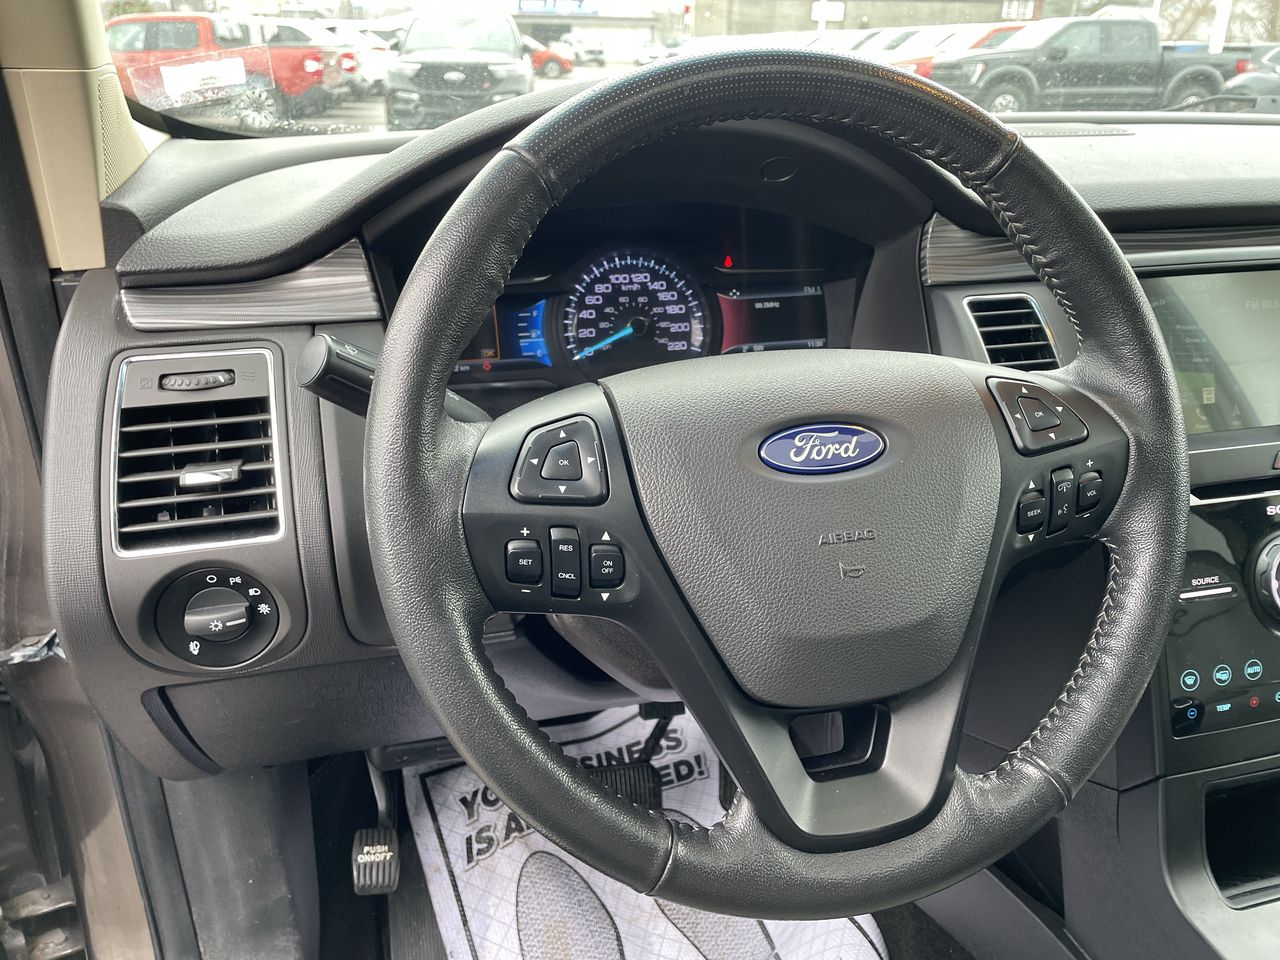 2019 Ford Flex - 21259B Full Image 14